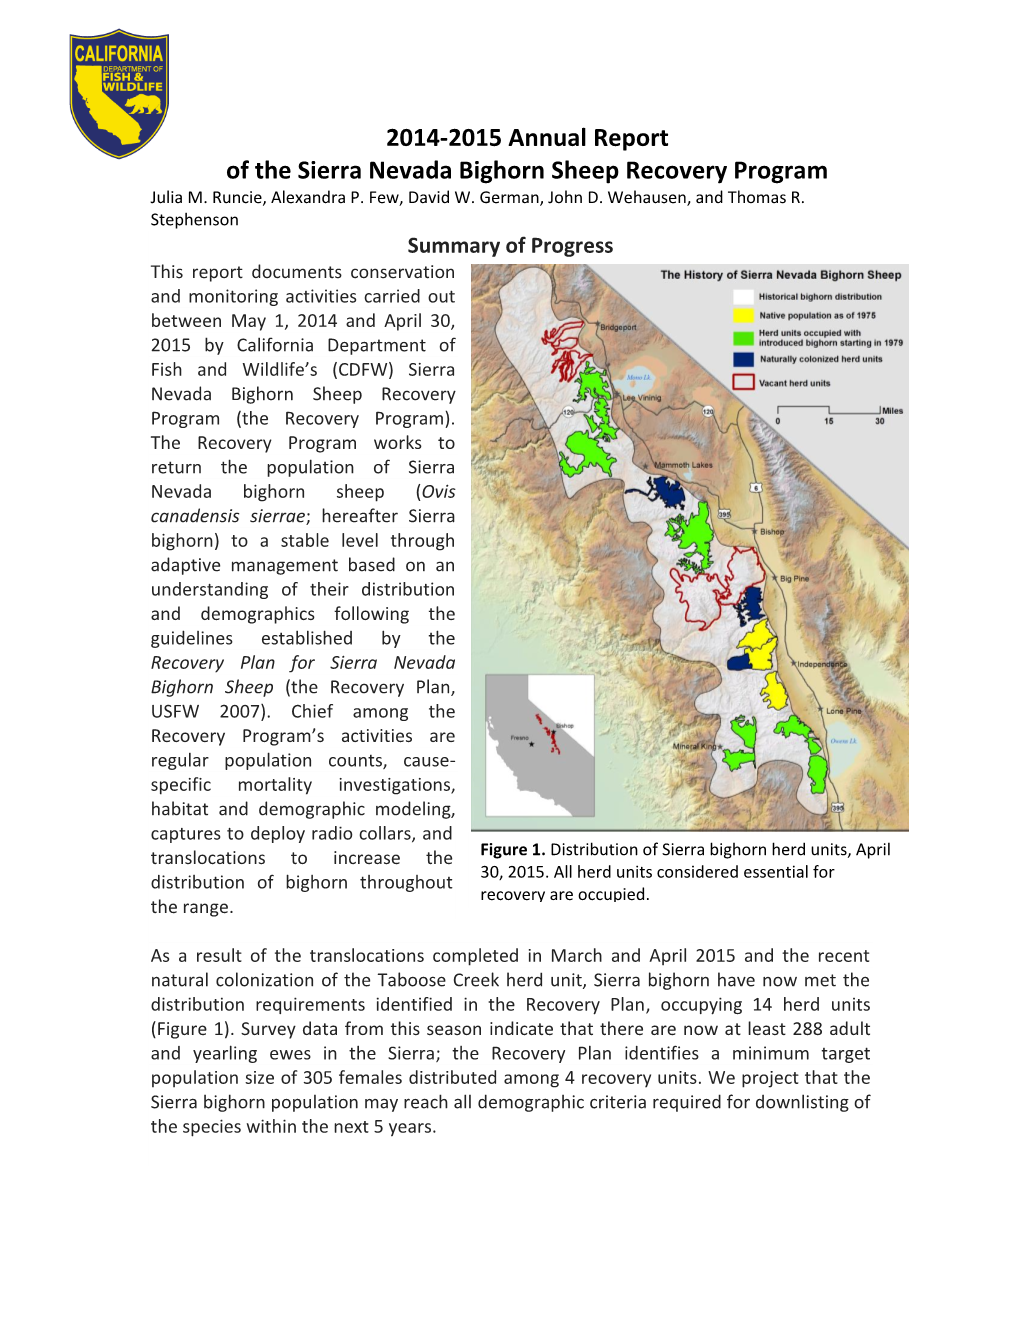 2014-2015 Annual Report of the Sierra Nevada Bighorn Sheep Recovery Program Julia M